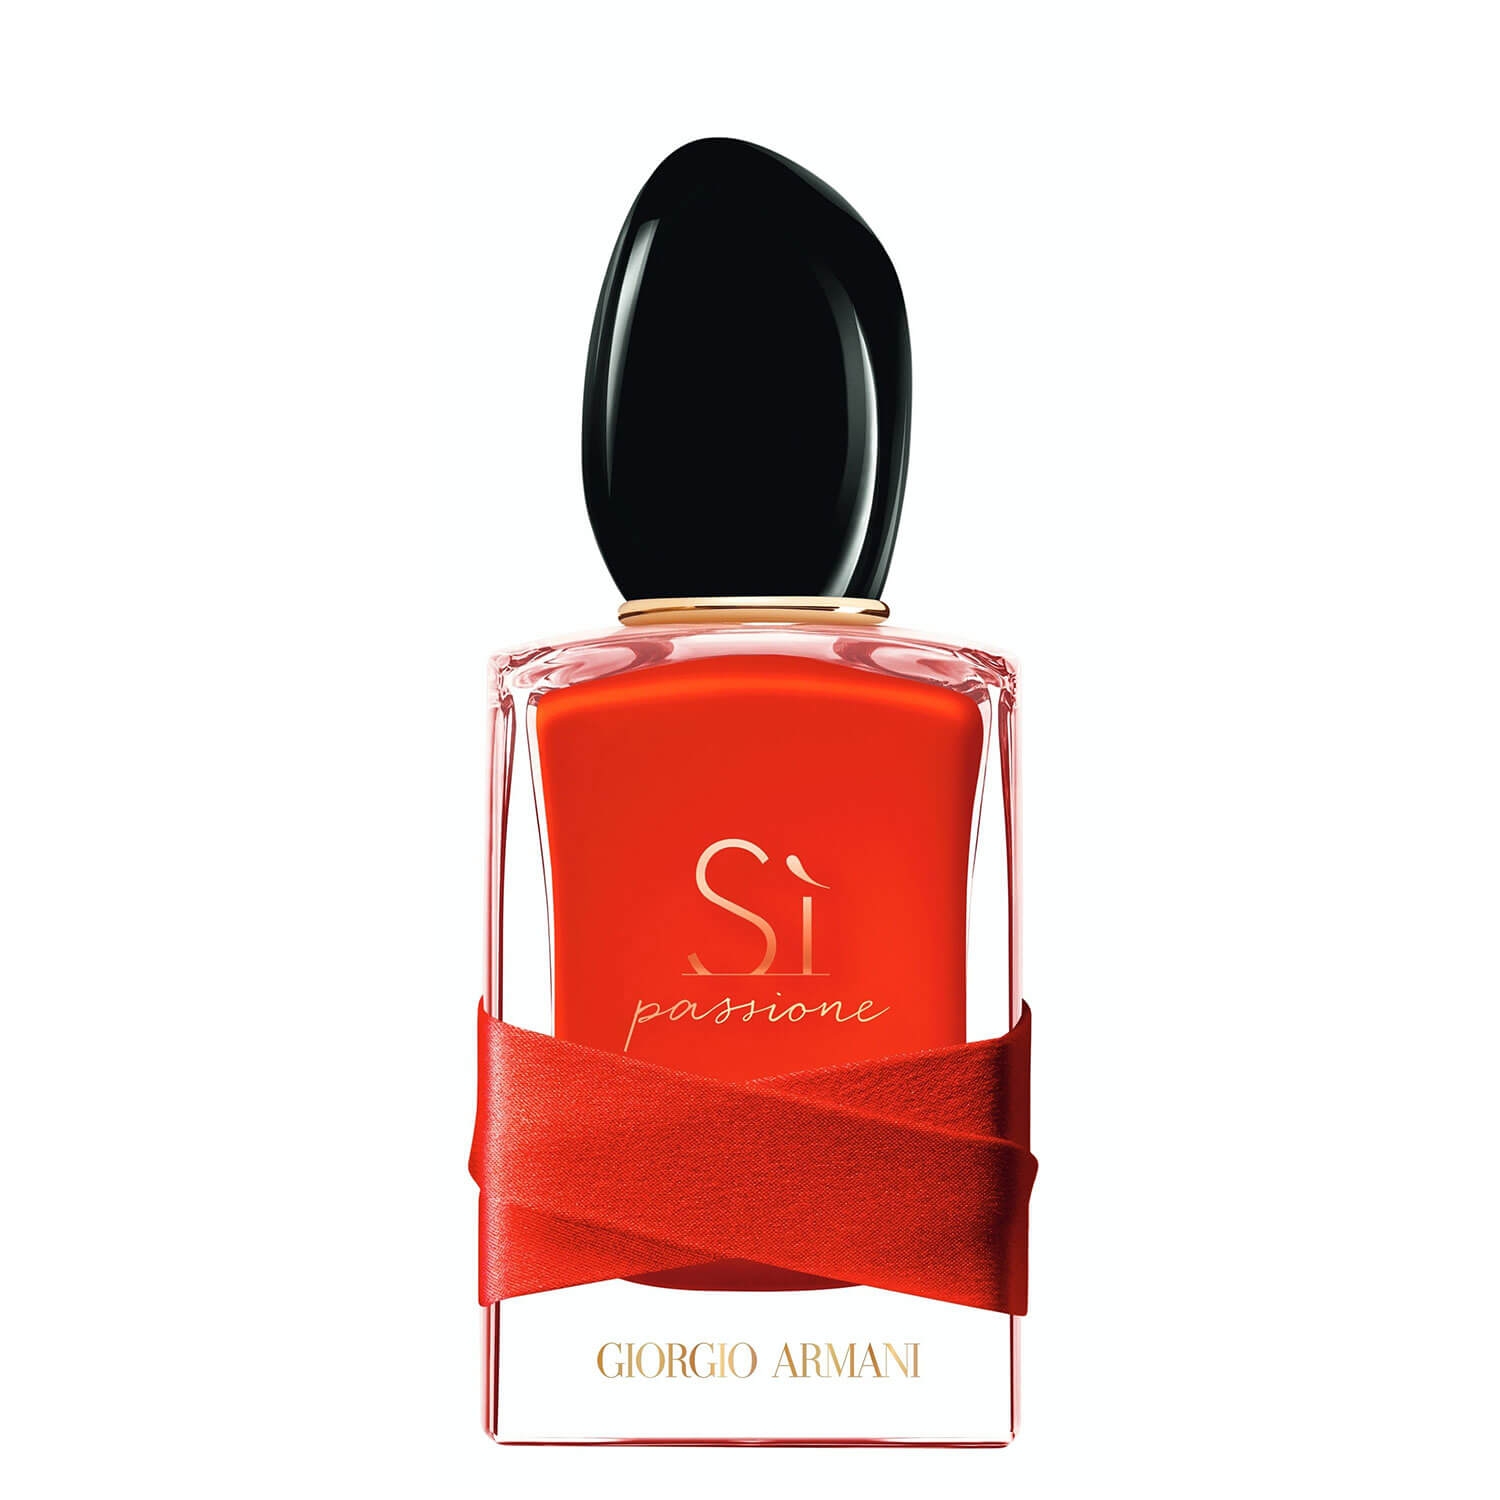 Product image from Sì - Passione Red Maestro Eau de Parfum